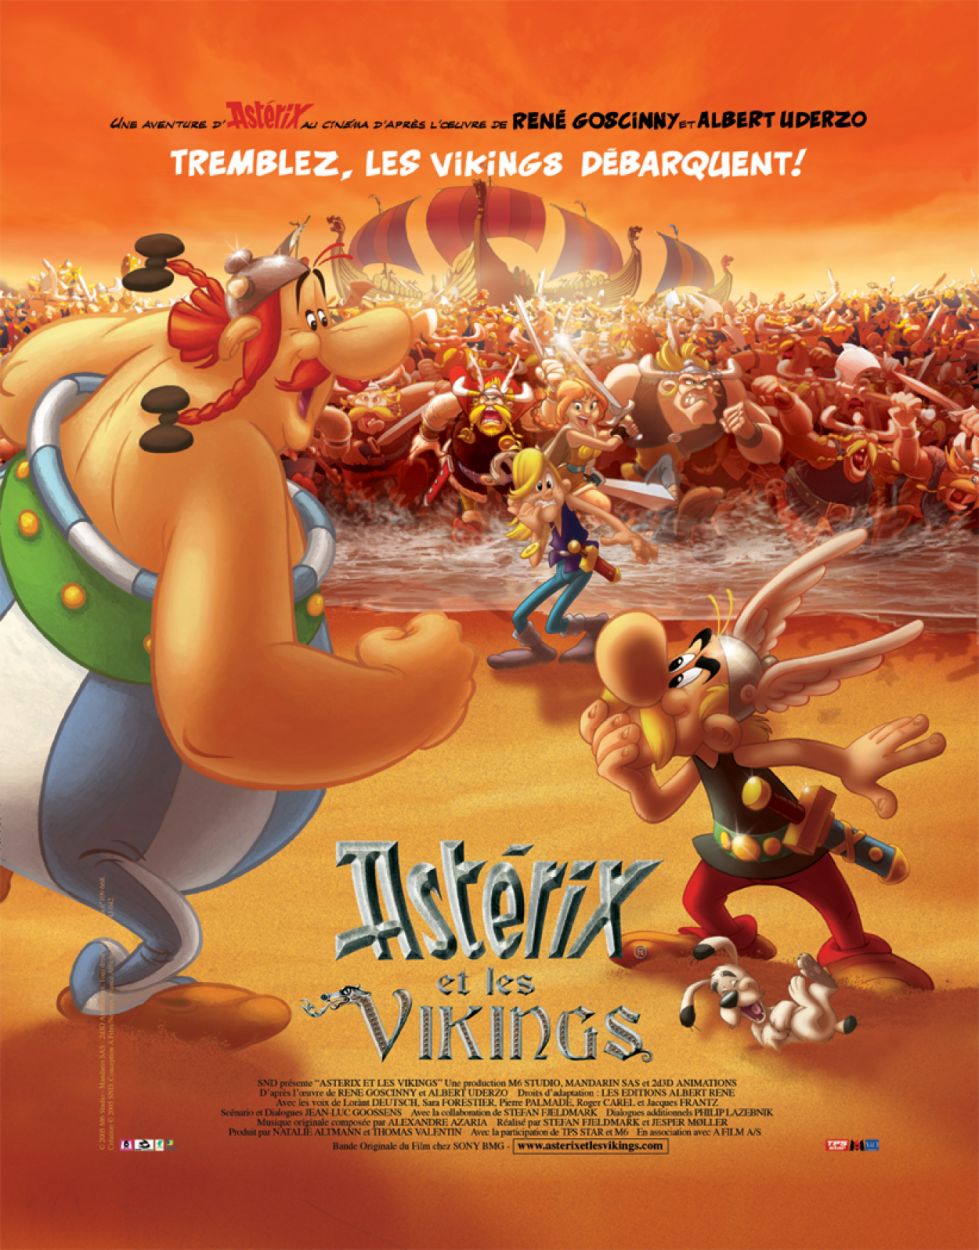 Asterix & the Vikings